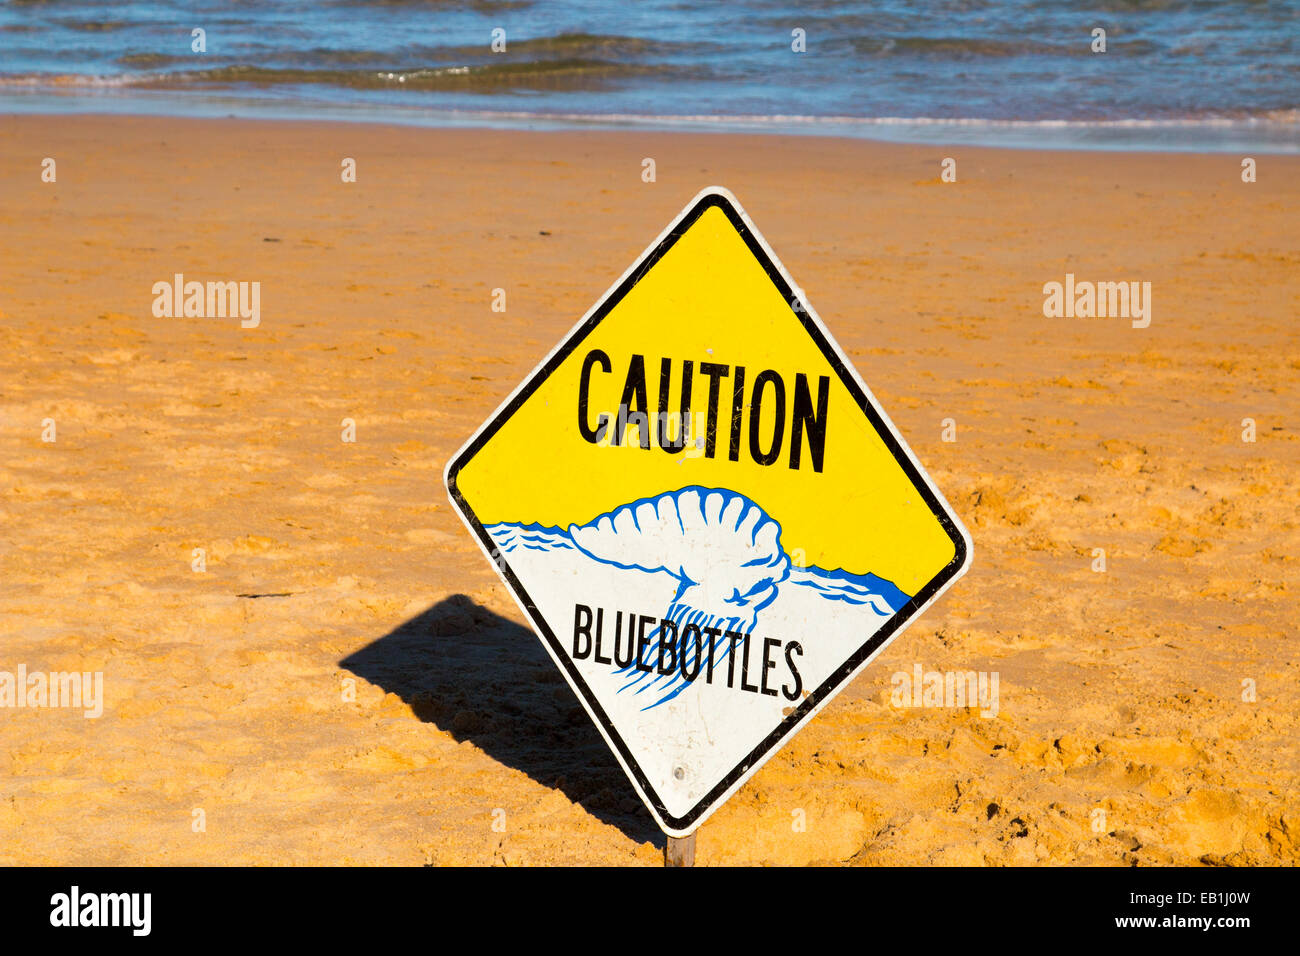 Portuguese man o' war Physalia physalis bluebottles warning sign on freshwater beach,sydney,australia Stock Photo